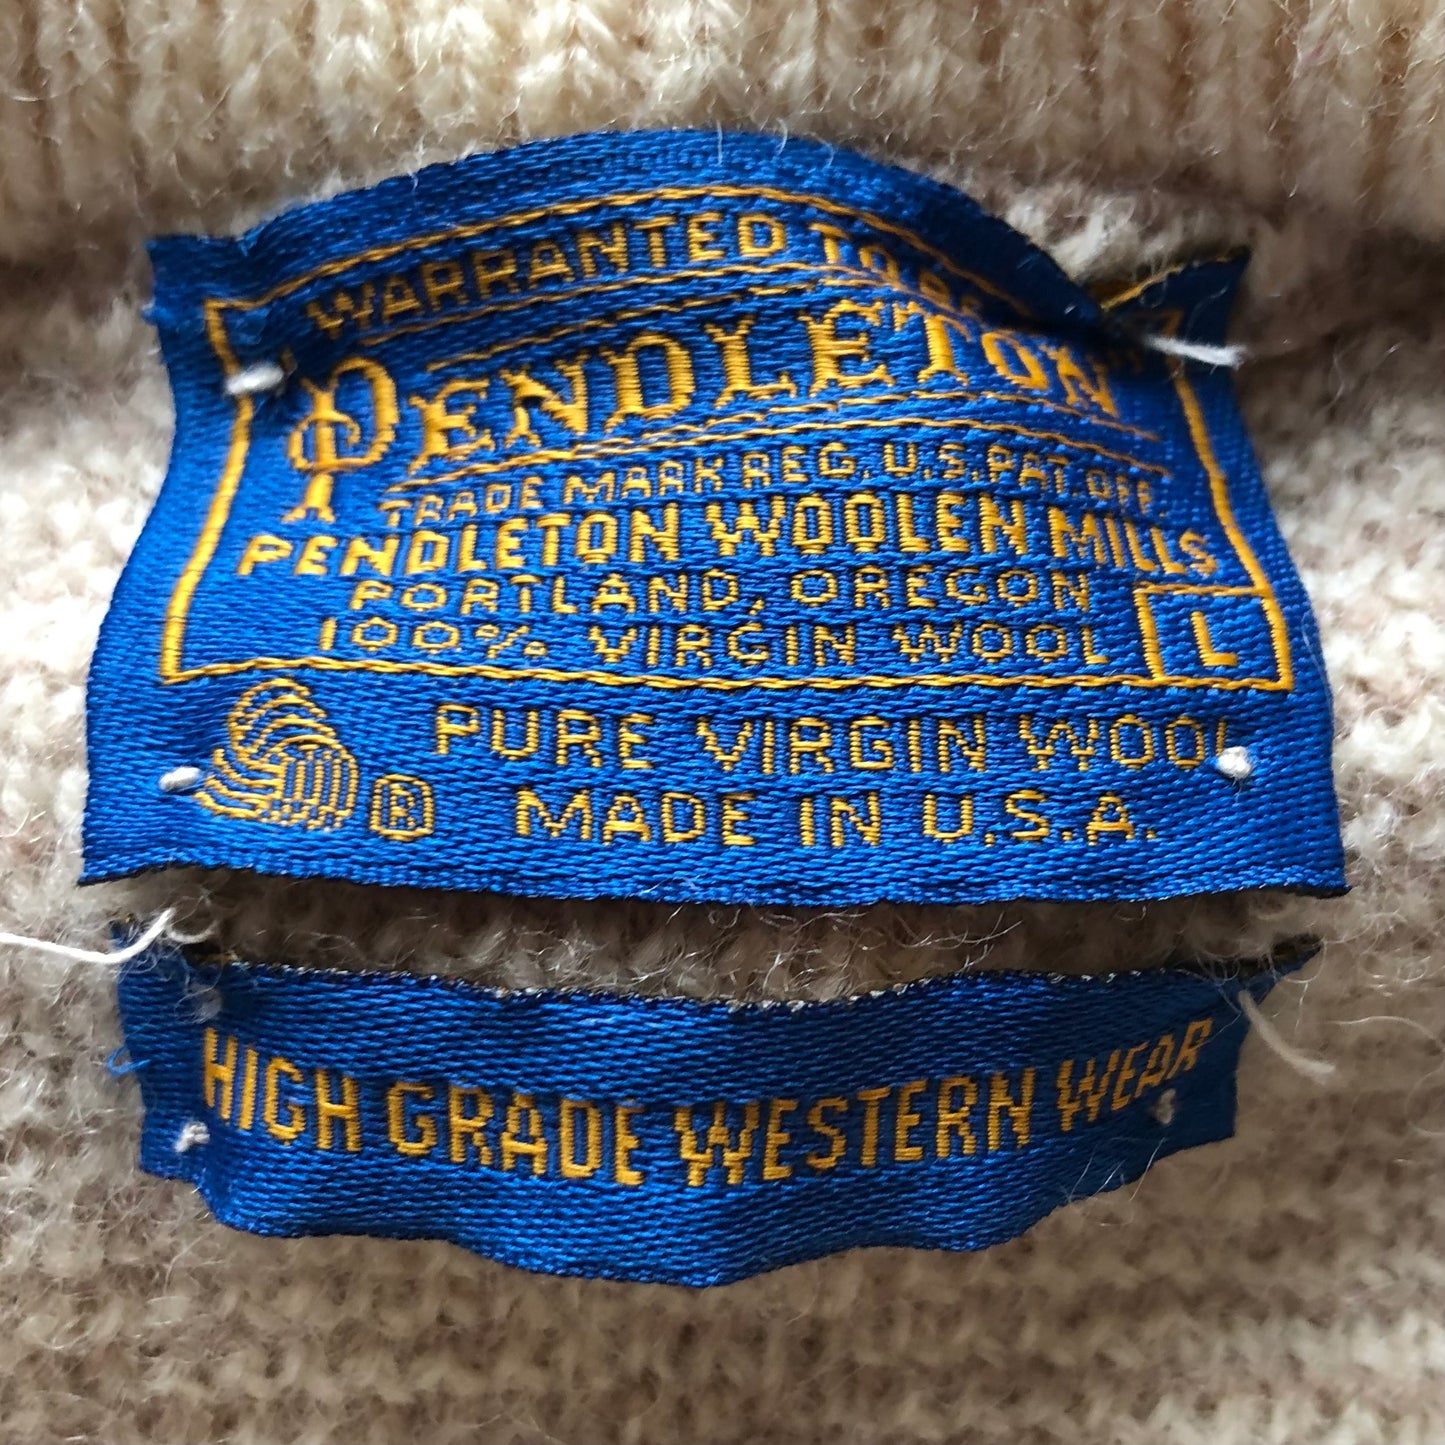 70’s Vintage Pendleton Woolen Mills High Grade Western Wear Sweater | Made in USA